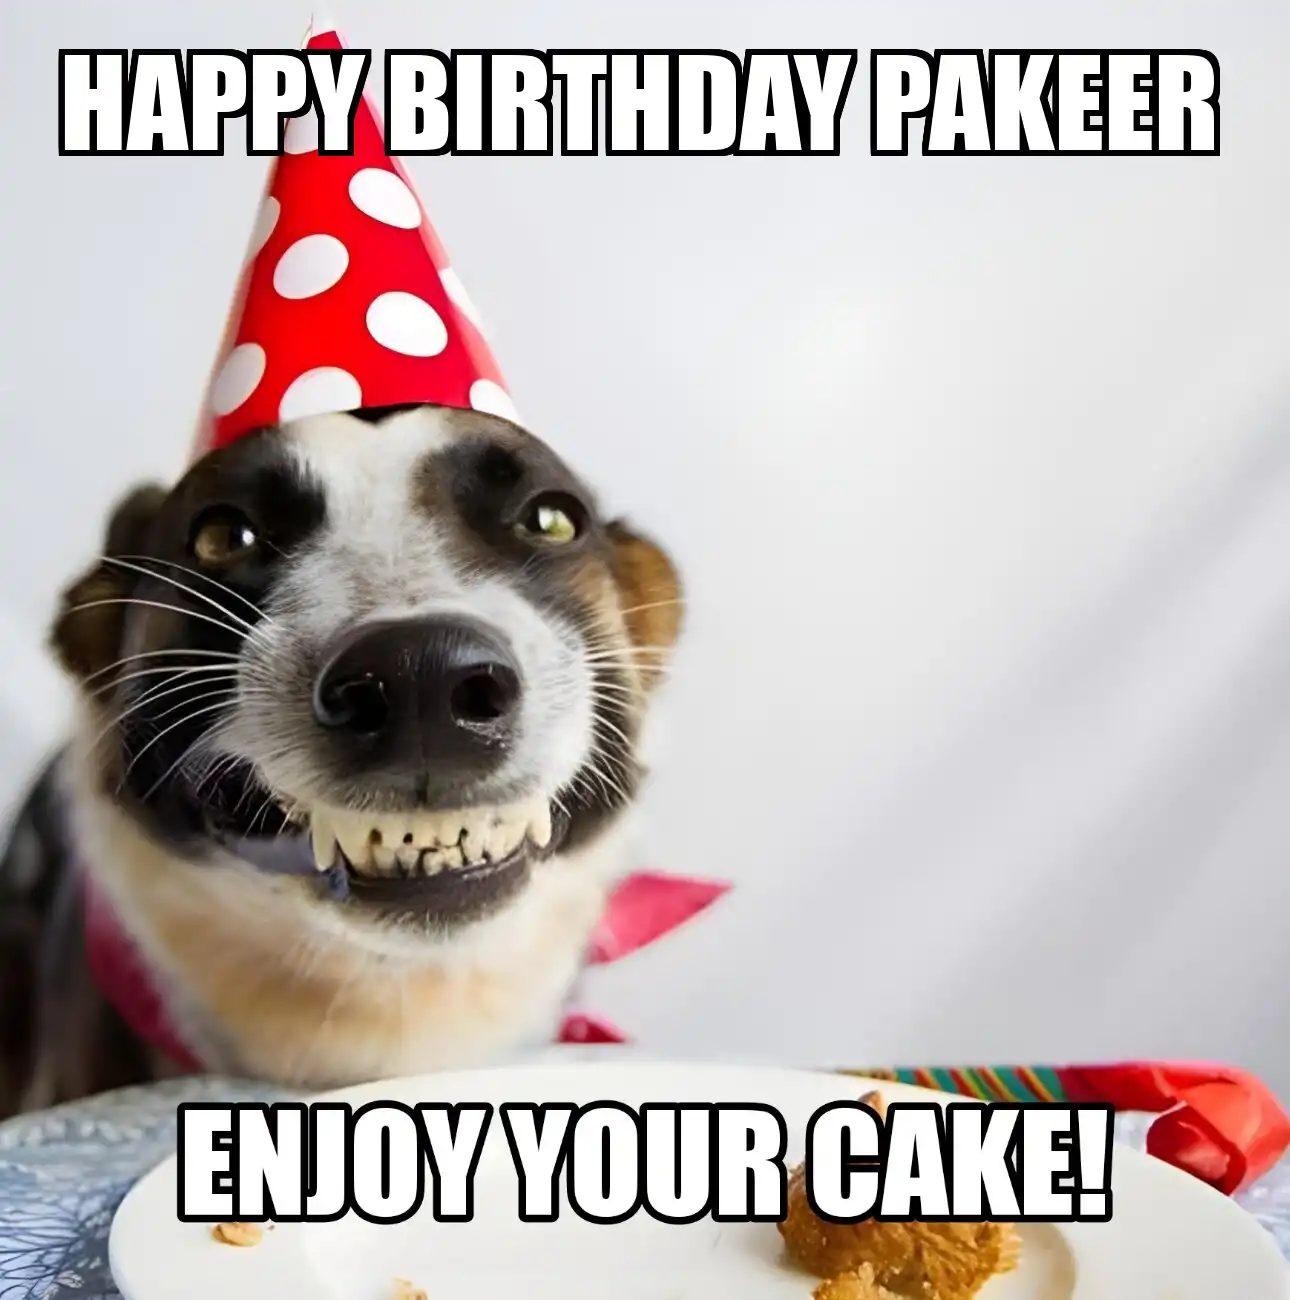 Happy Birthday Pakeer Enjoy Your Cake Dog Meme